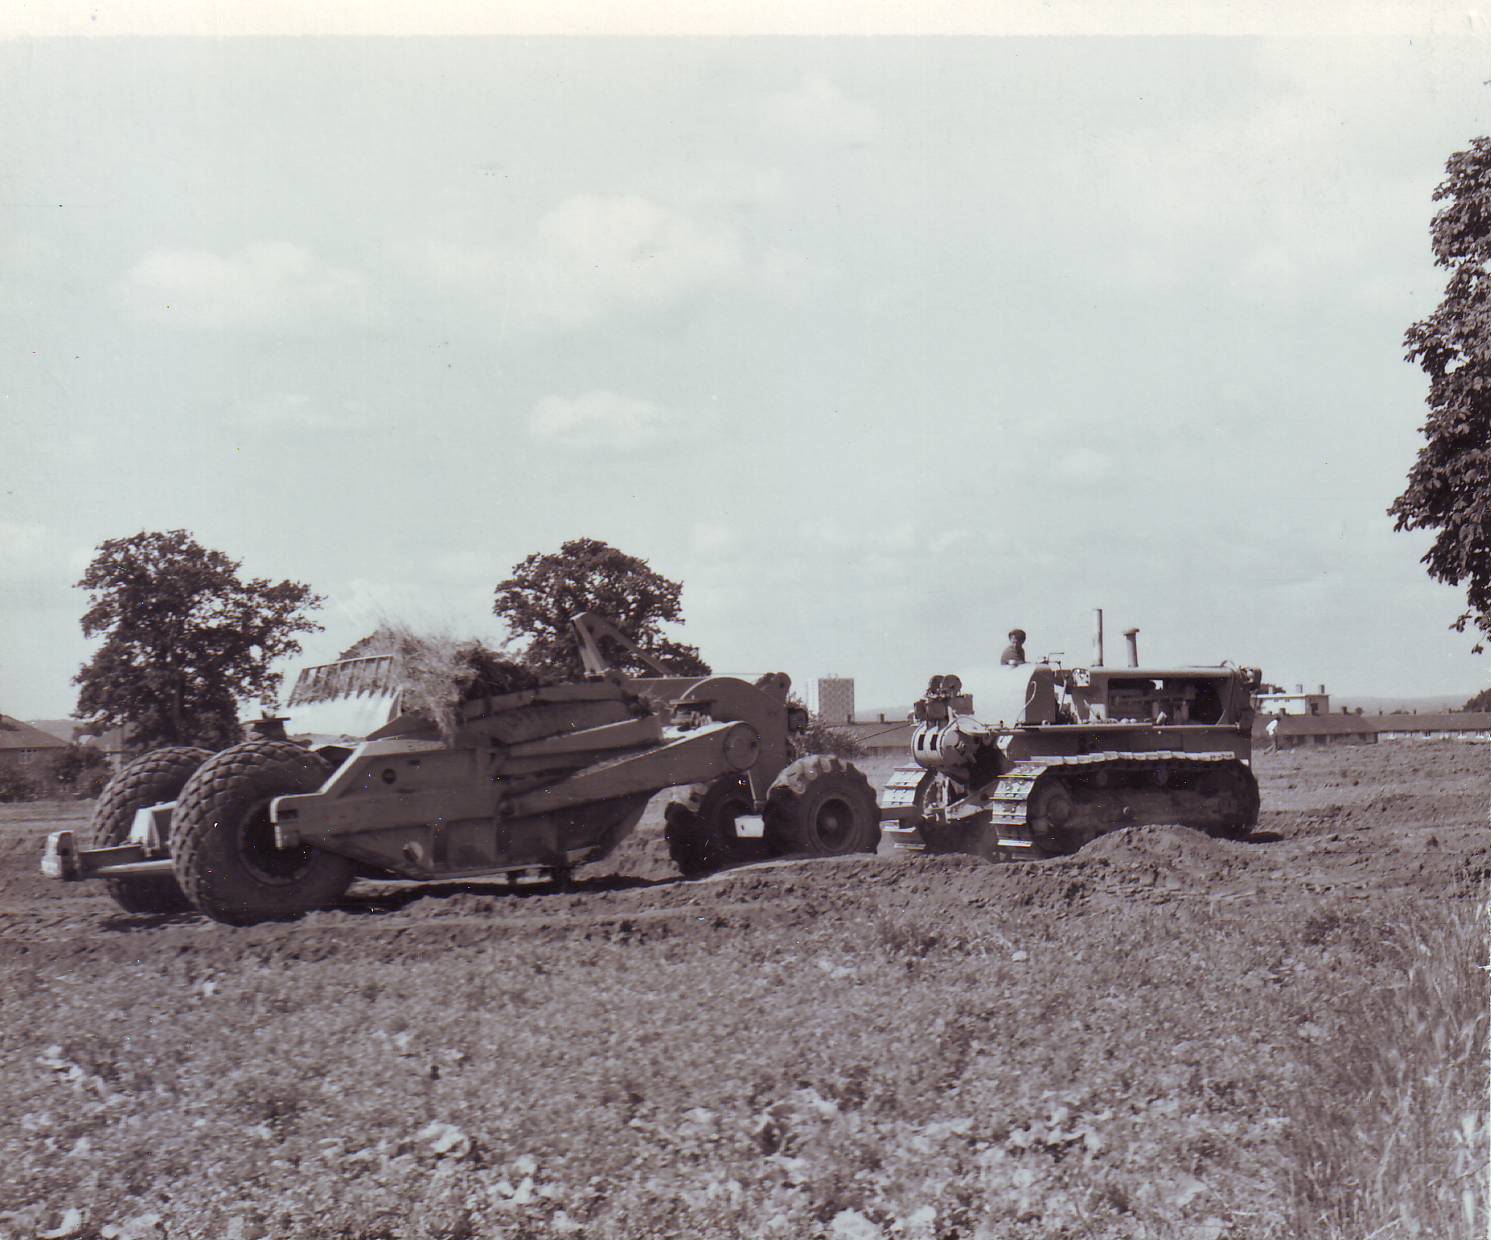 Removing topsoil at the Maybush site, Jul 1964